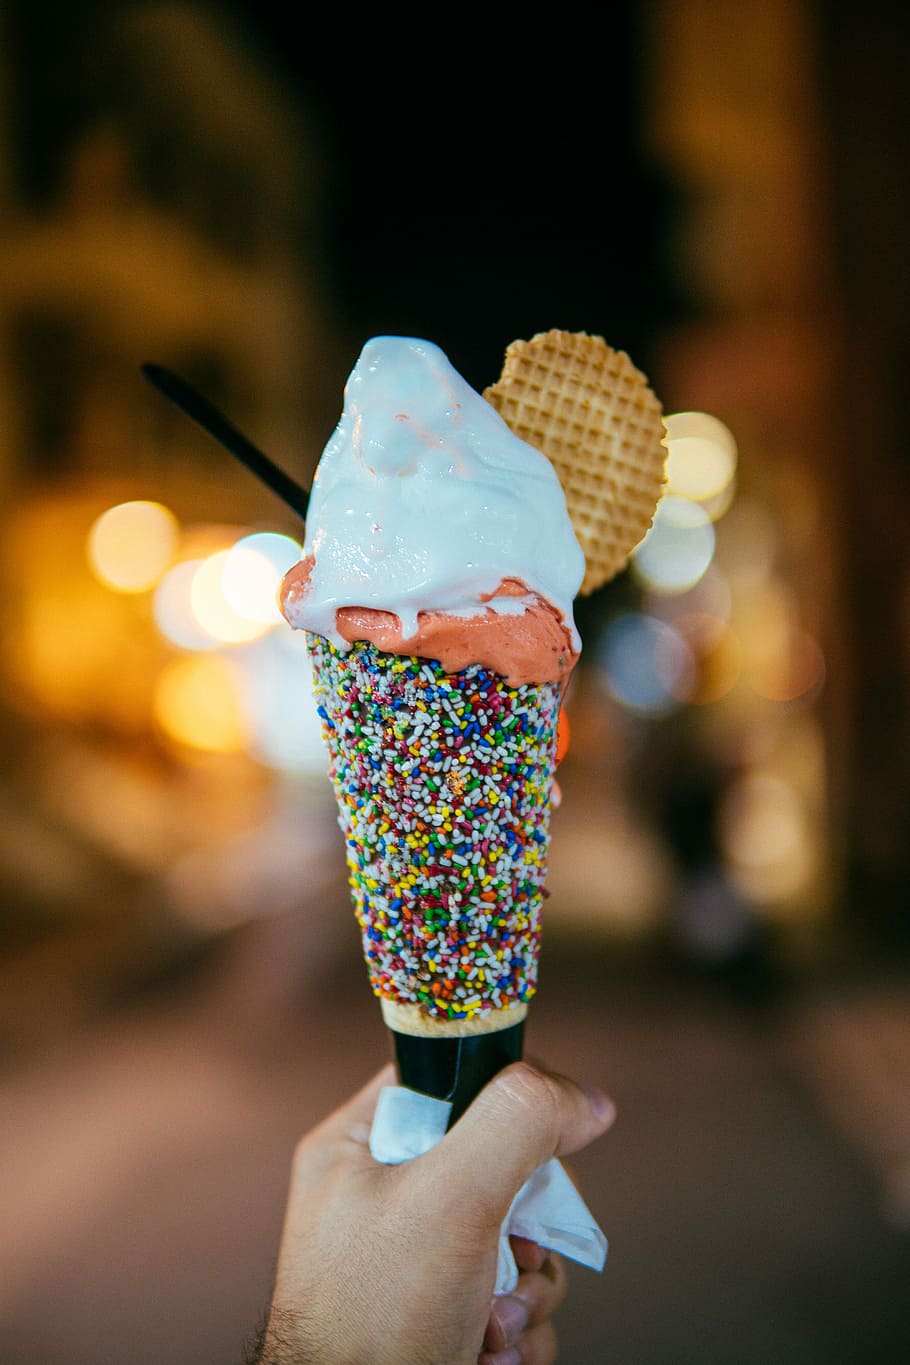 person holding multicolored sprinkled ice cream cone with vanilla flavored ice cream, focused photo of a white ice cream with cone